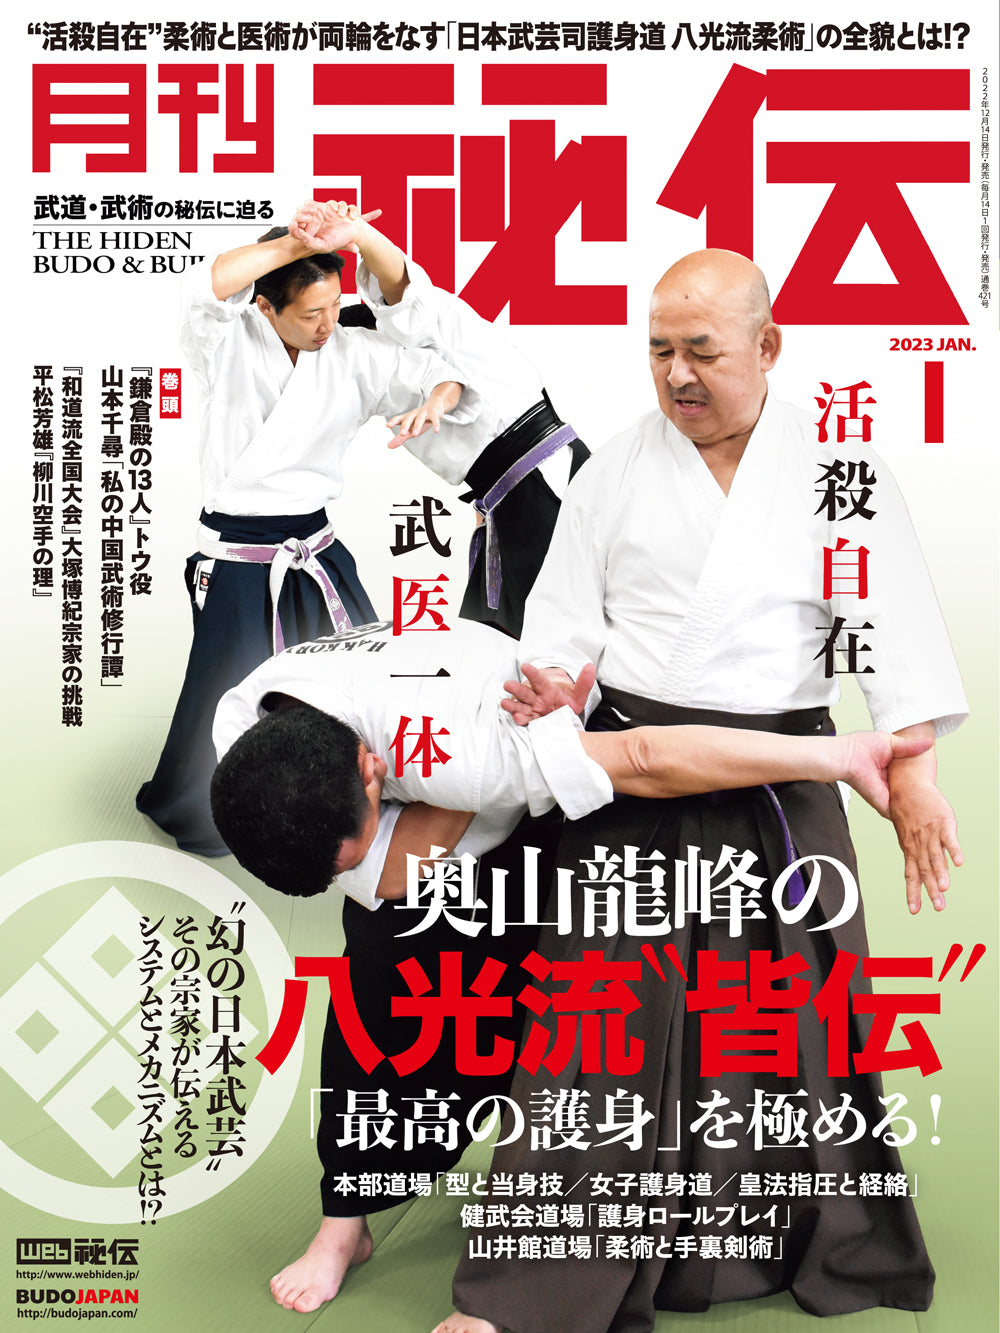 Hiden Budo & Bujutsu Magazine Jan 2023